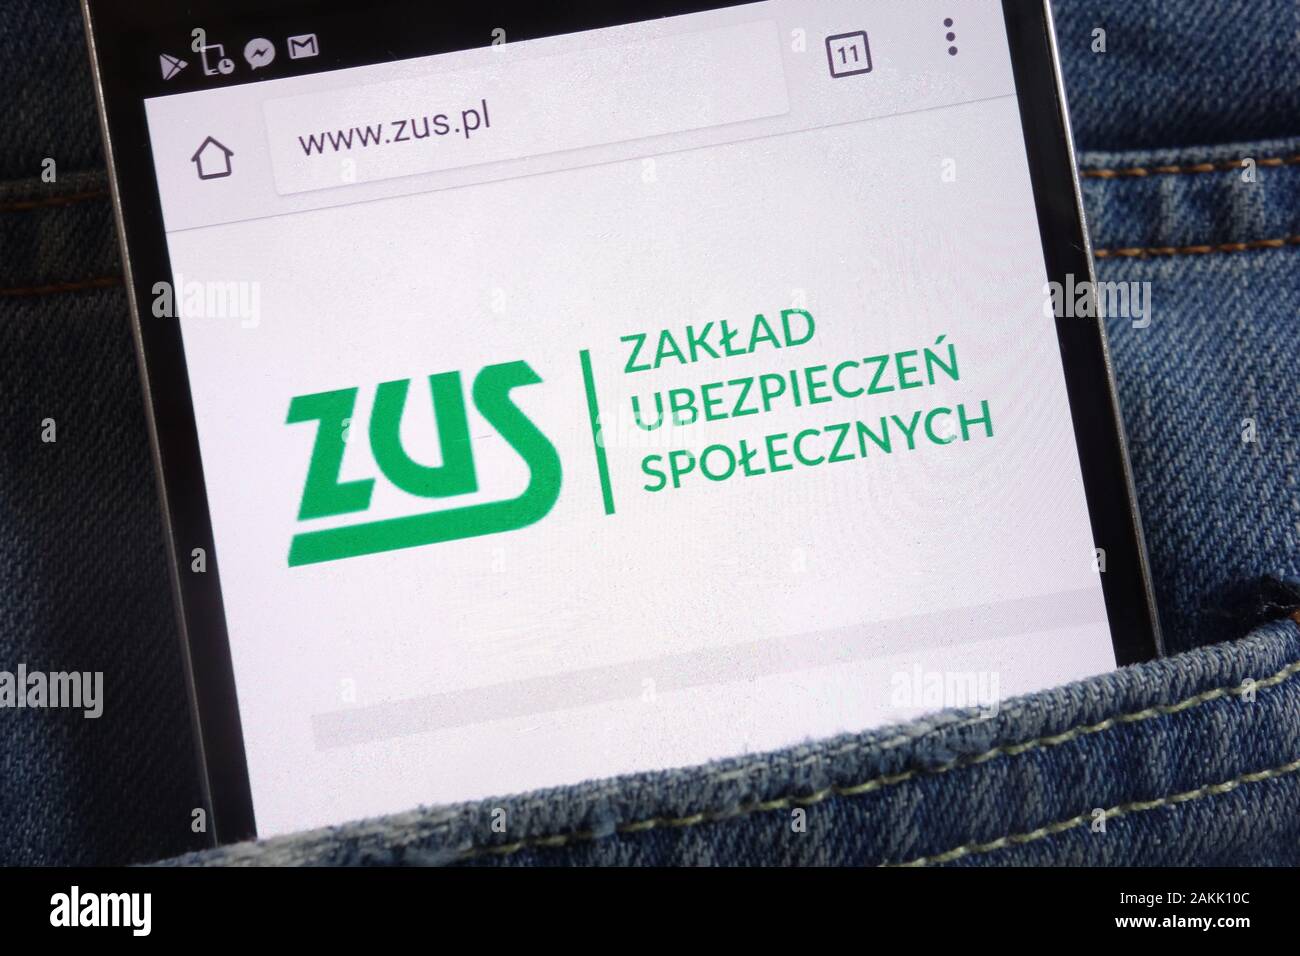 ZUS (Polish social security) website displayed on smartphone hidden in jeans pocket Stock Photo